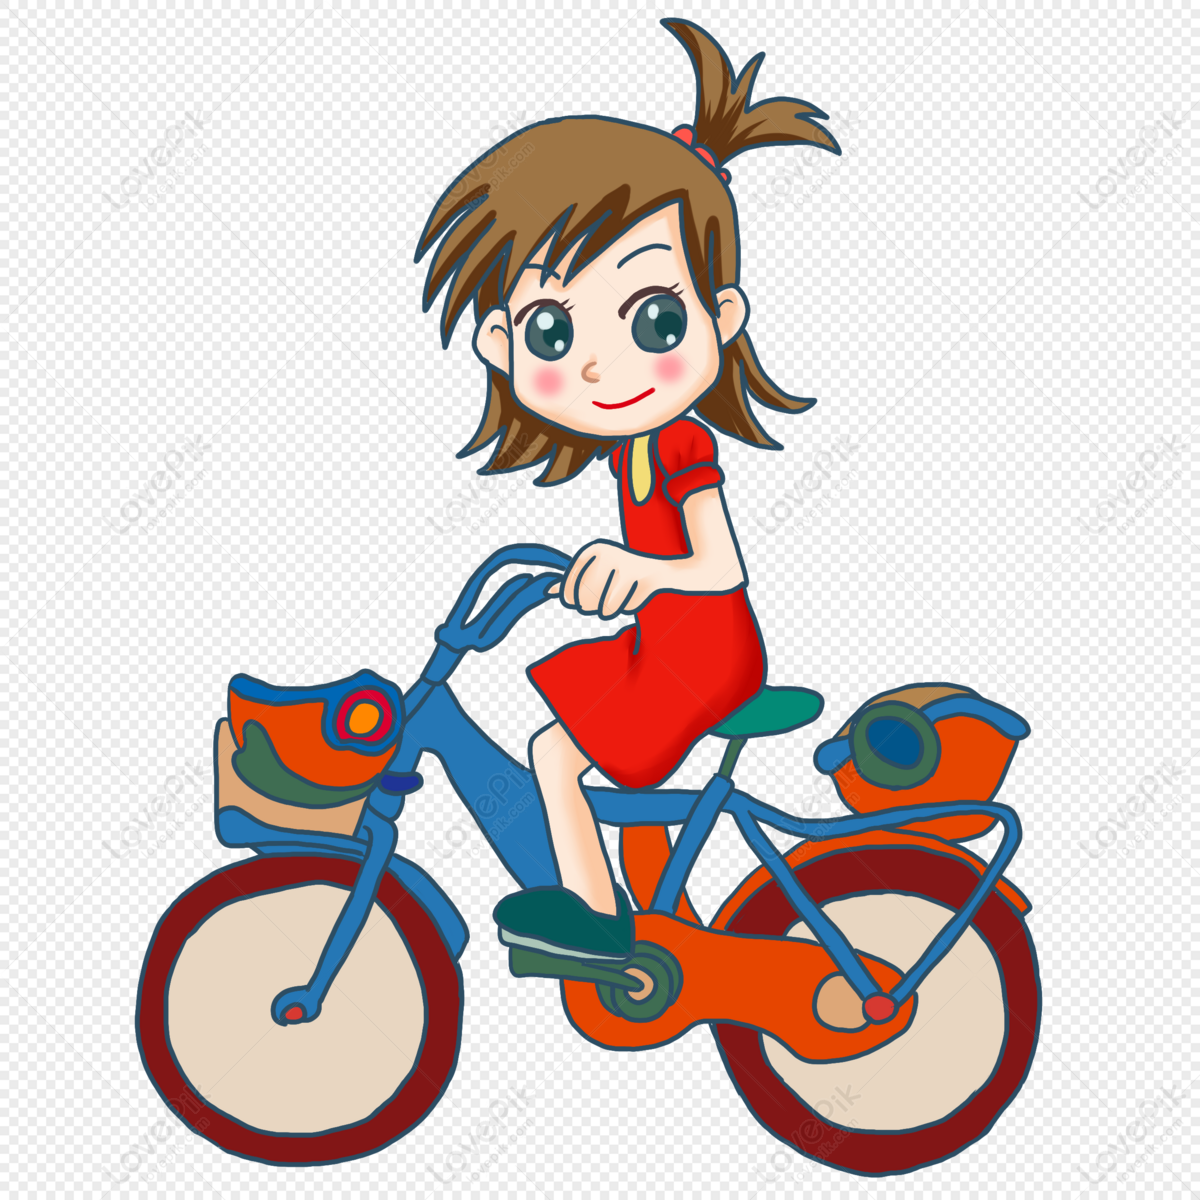 साइकिल चलाने वाली लड़की चित्र डाउनलोड_ग्राफिक्सPRFचित्र  आईडी401336360_PNGचित्र प्रारूपमुफ्त की तस्वीर